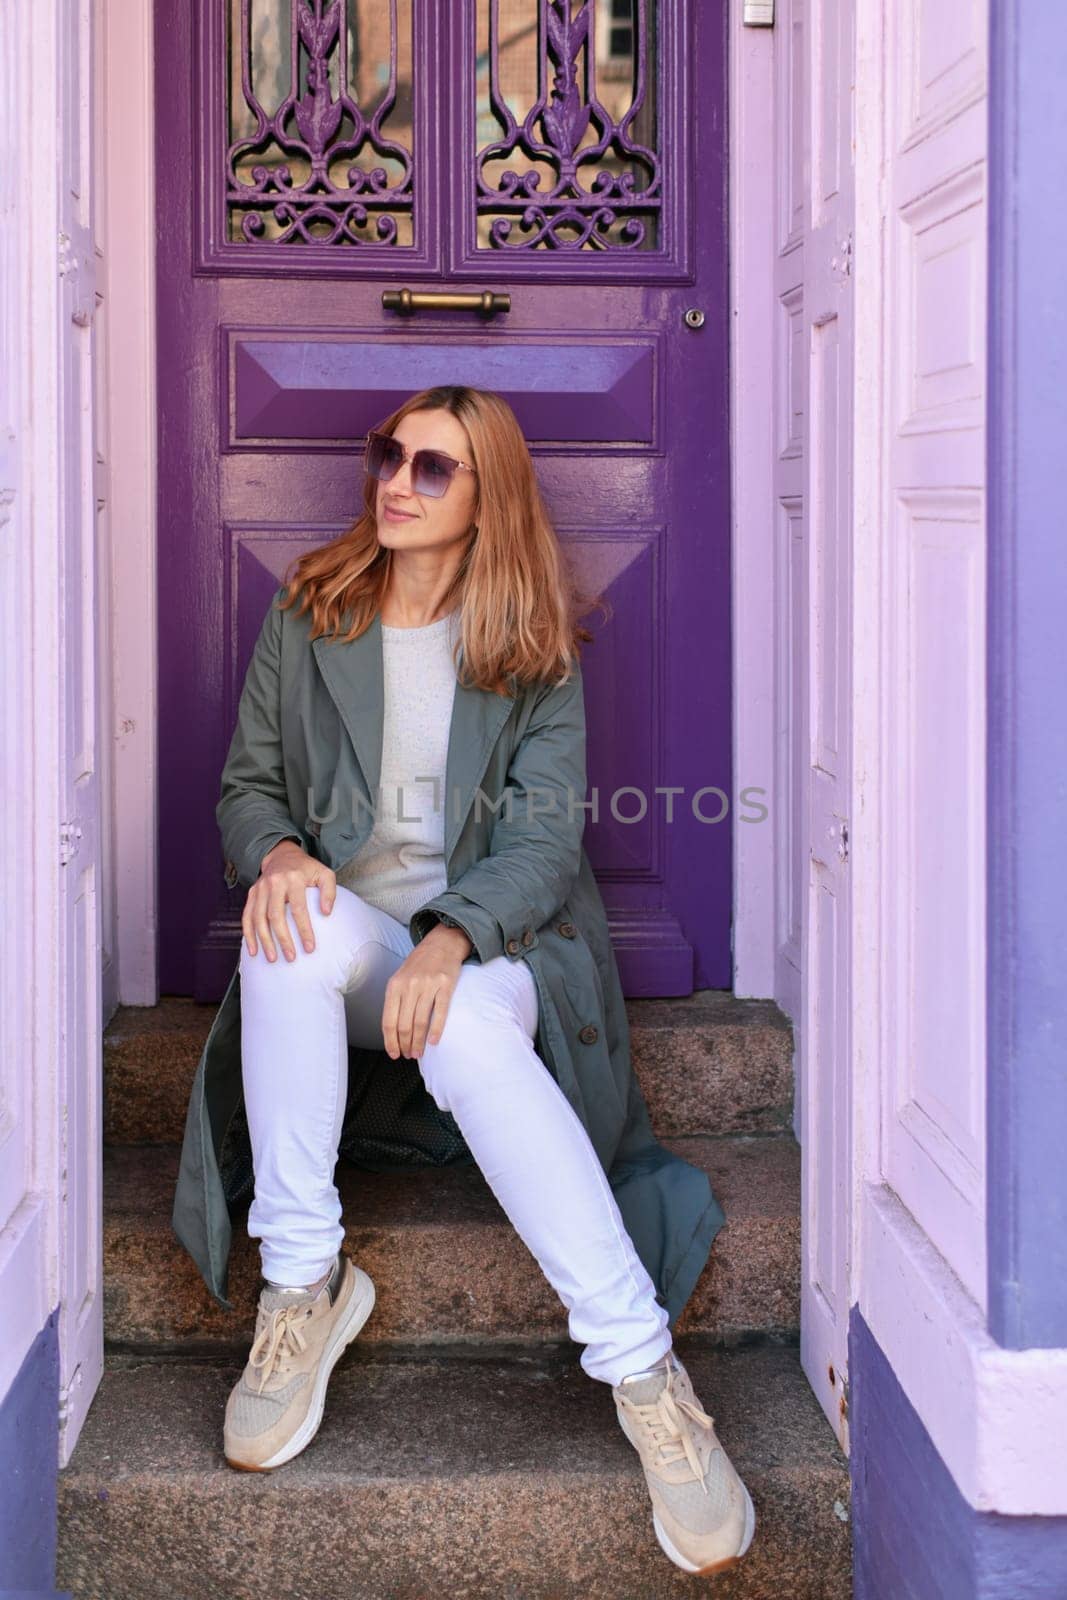 Young woman near purple door